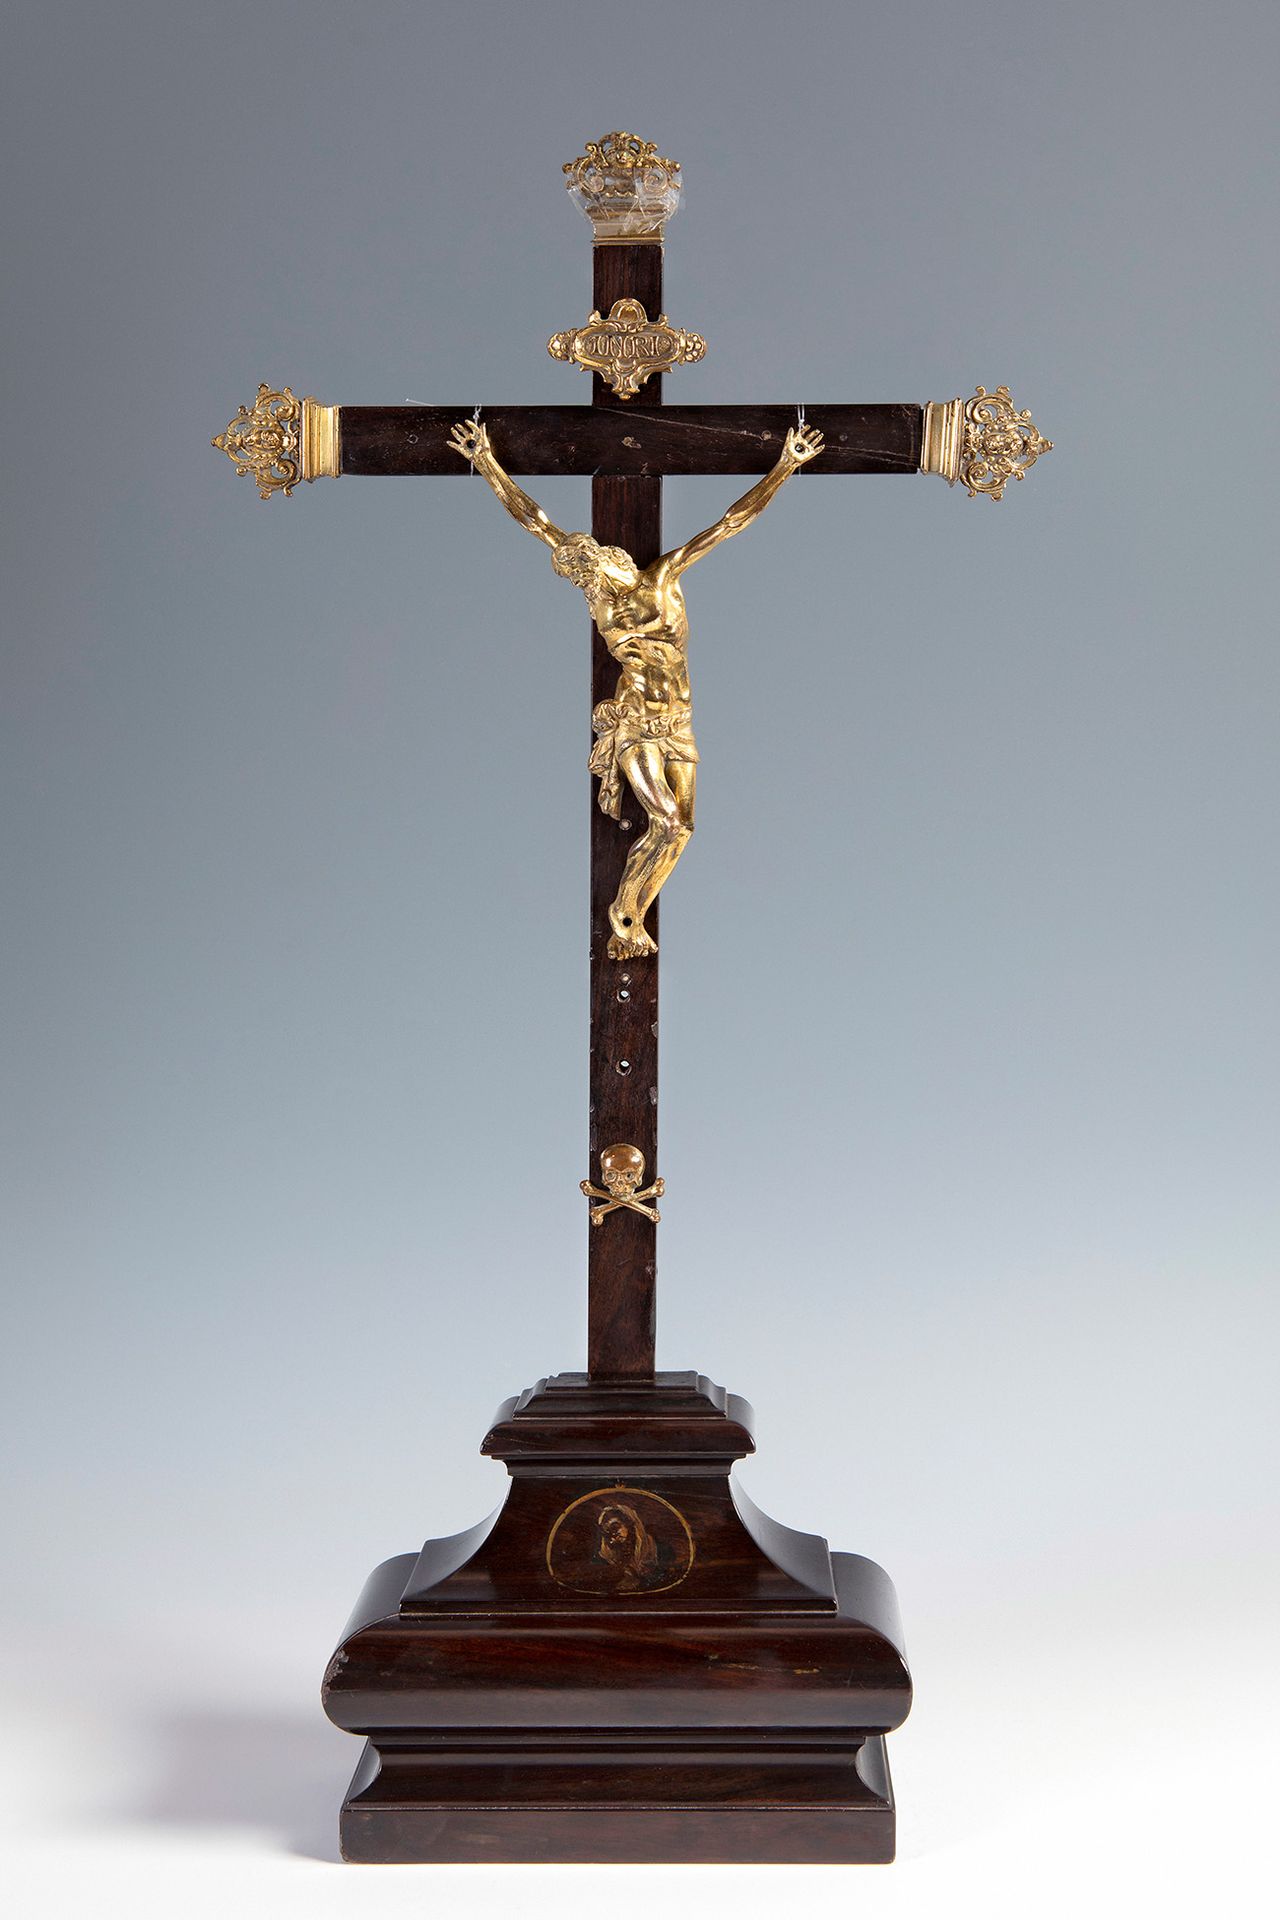 Italian school, 18th century. 意大利学校，18世纪。
基督。
镀金铜像。
木制十字架，有青铜应用。
尺寸。60 x 30 x 10&hellip;